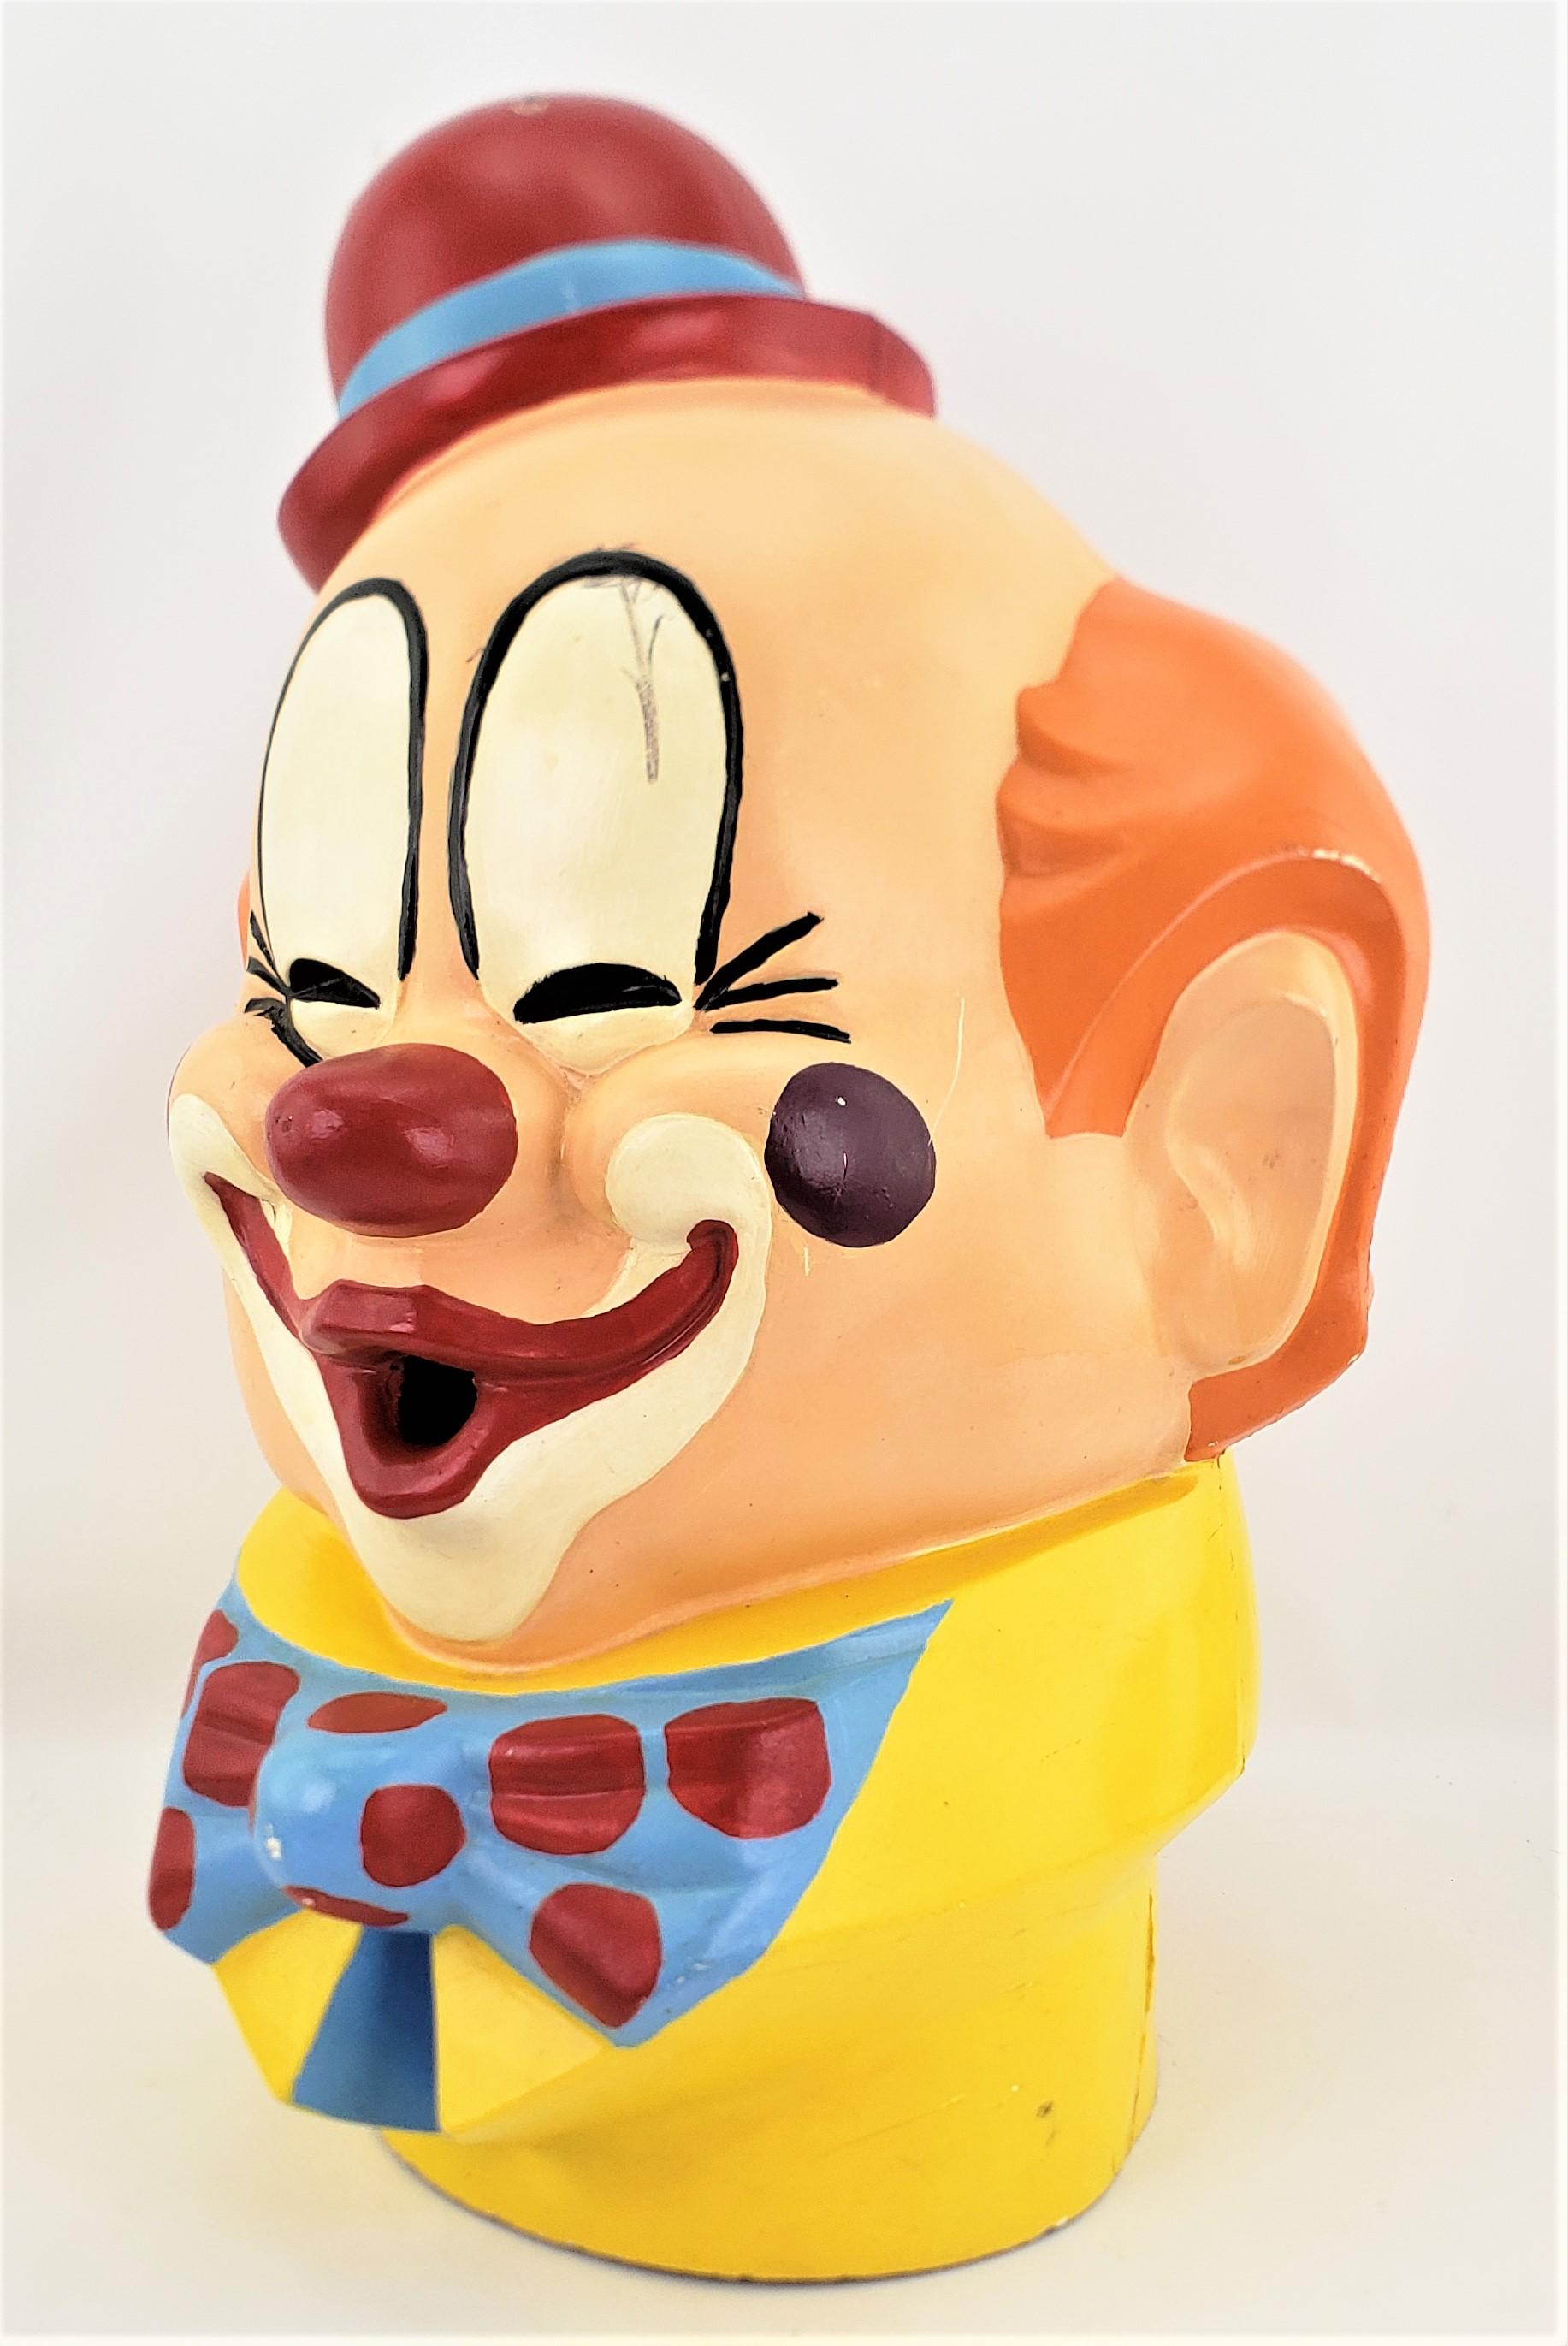 it the clown forehead